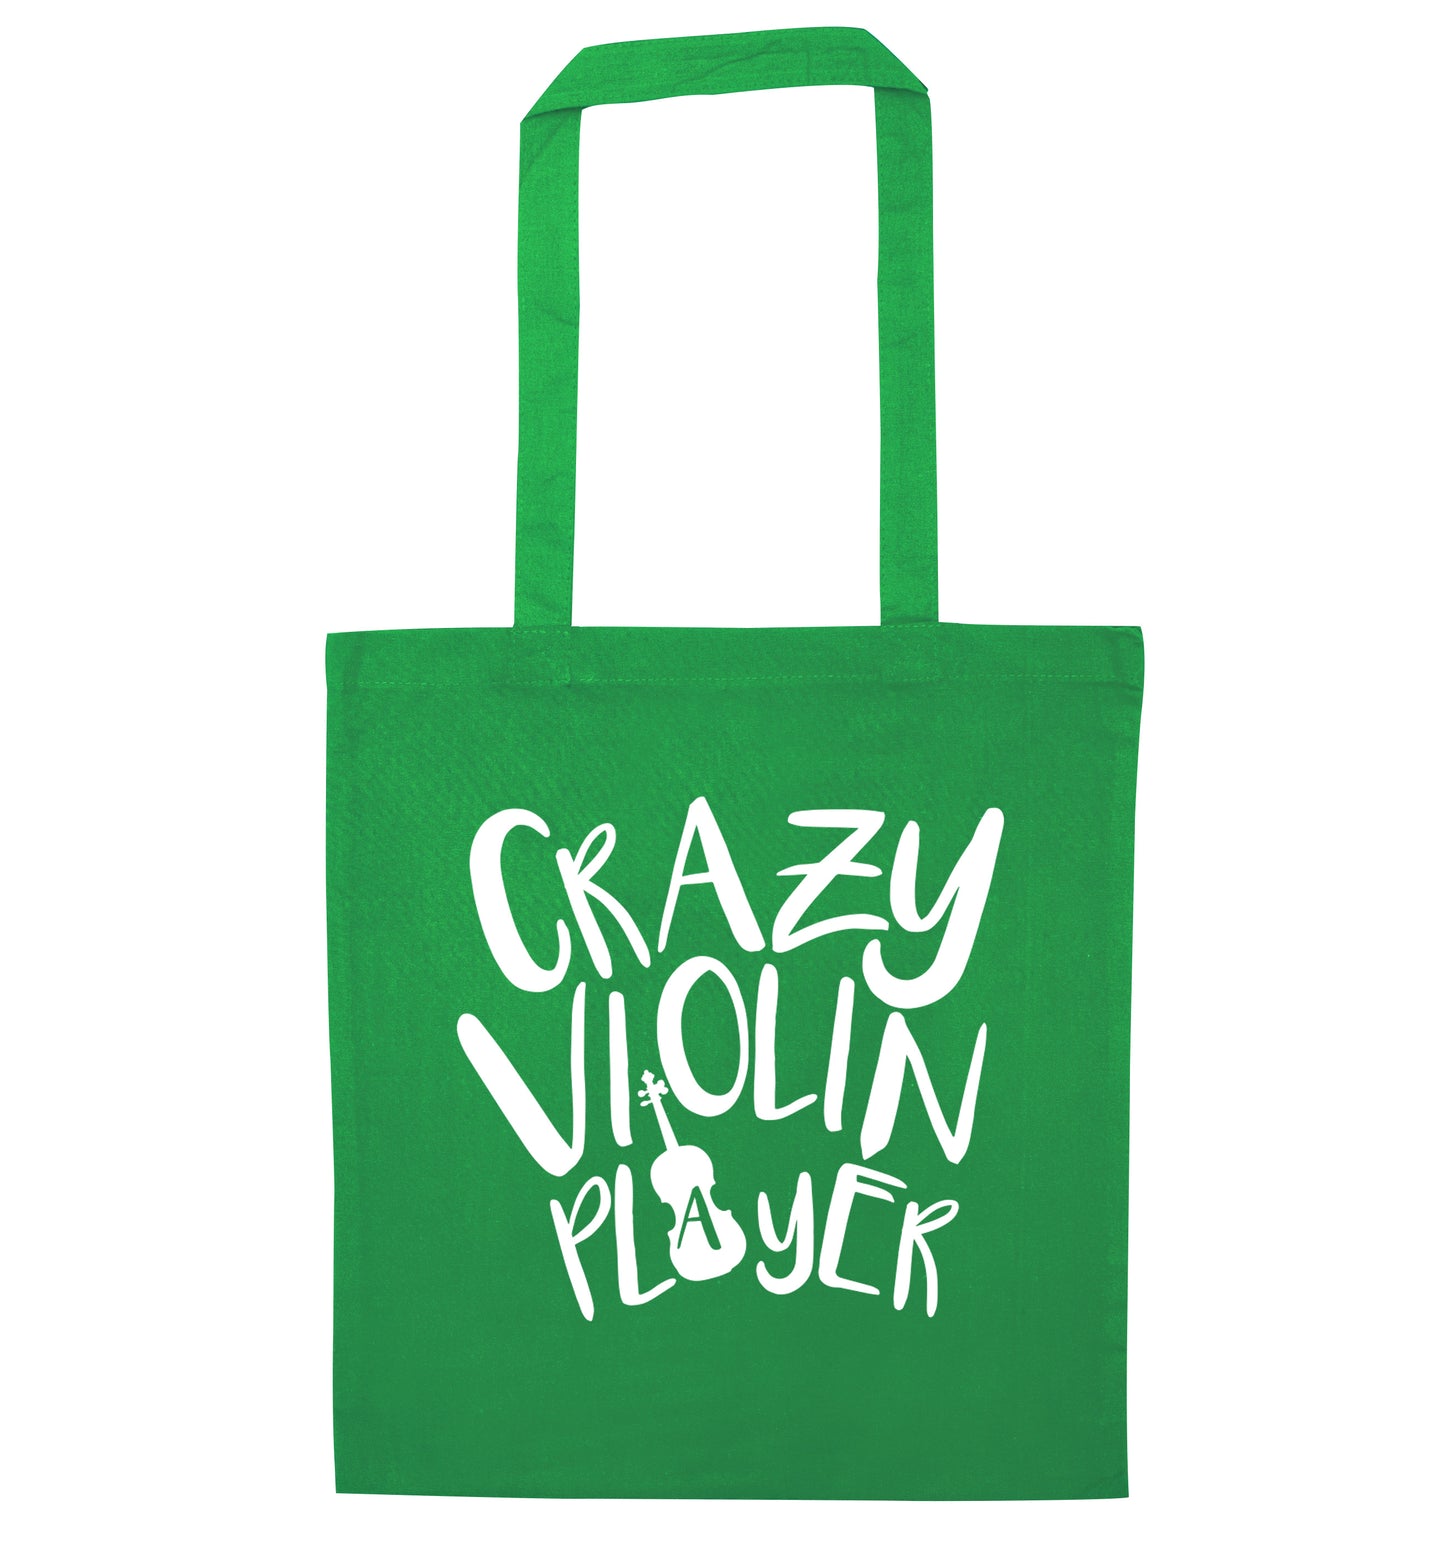 Crazy Violin Player green tote bag